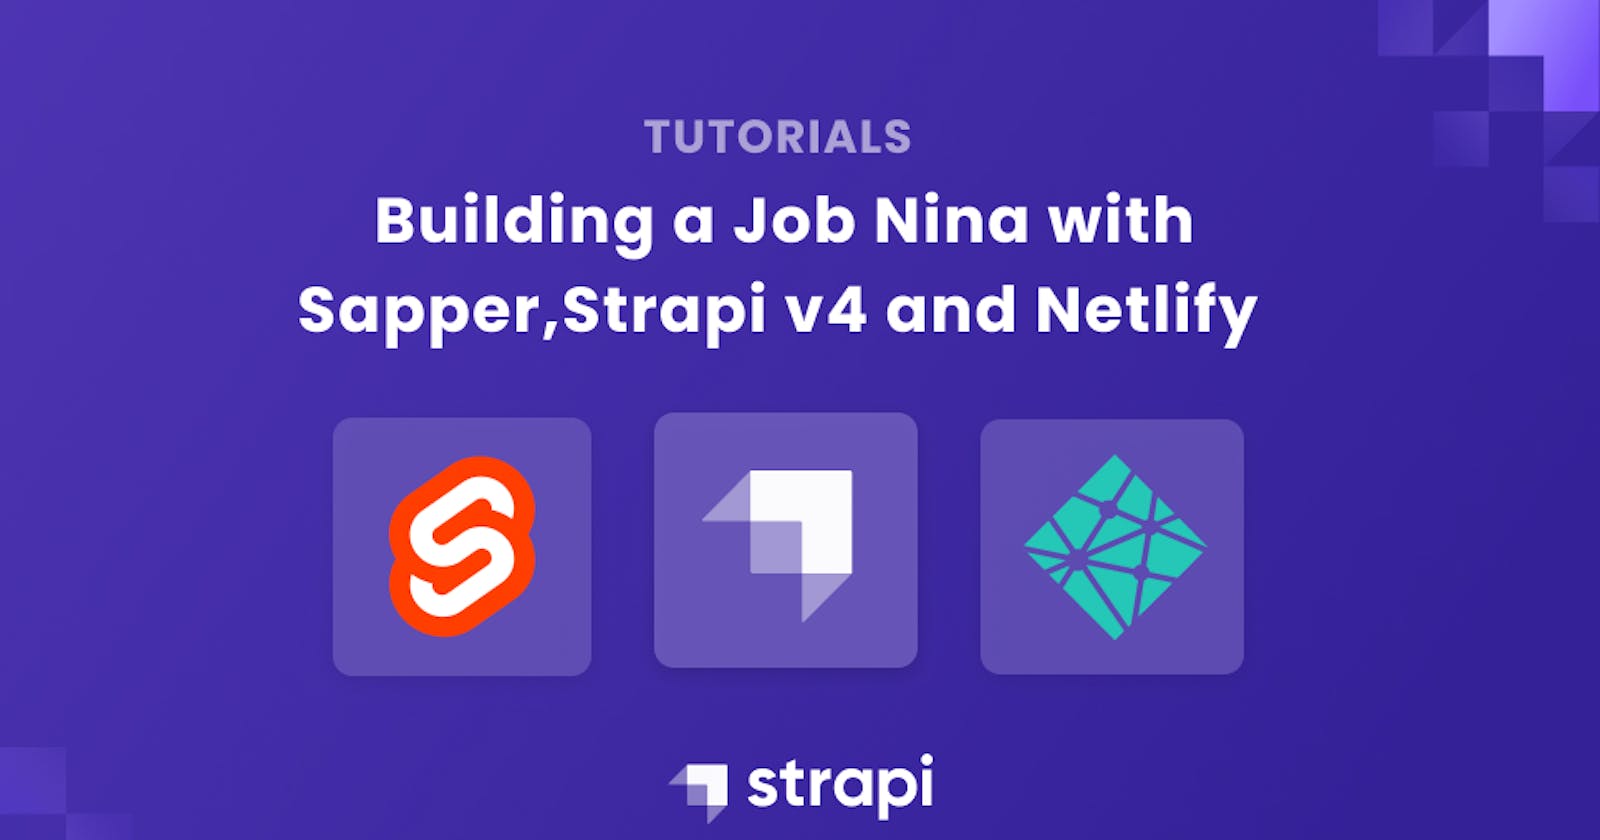 Building a Job Nina with Sapper, Strapi and Netlify